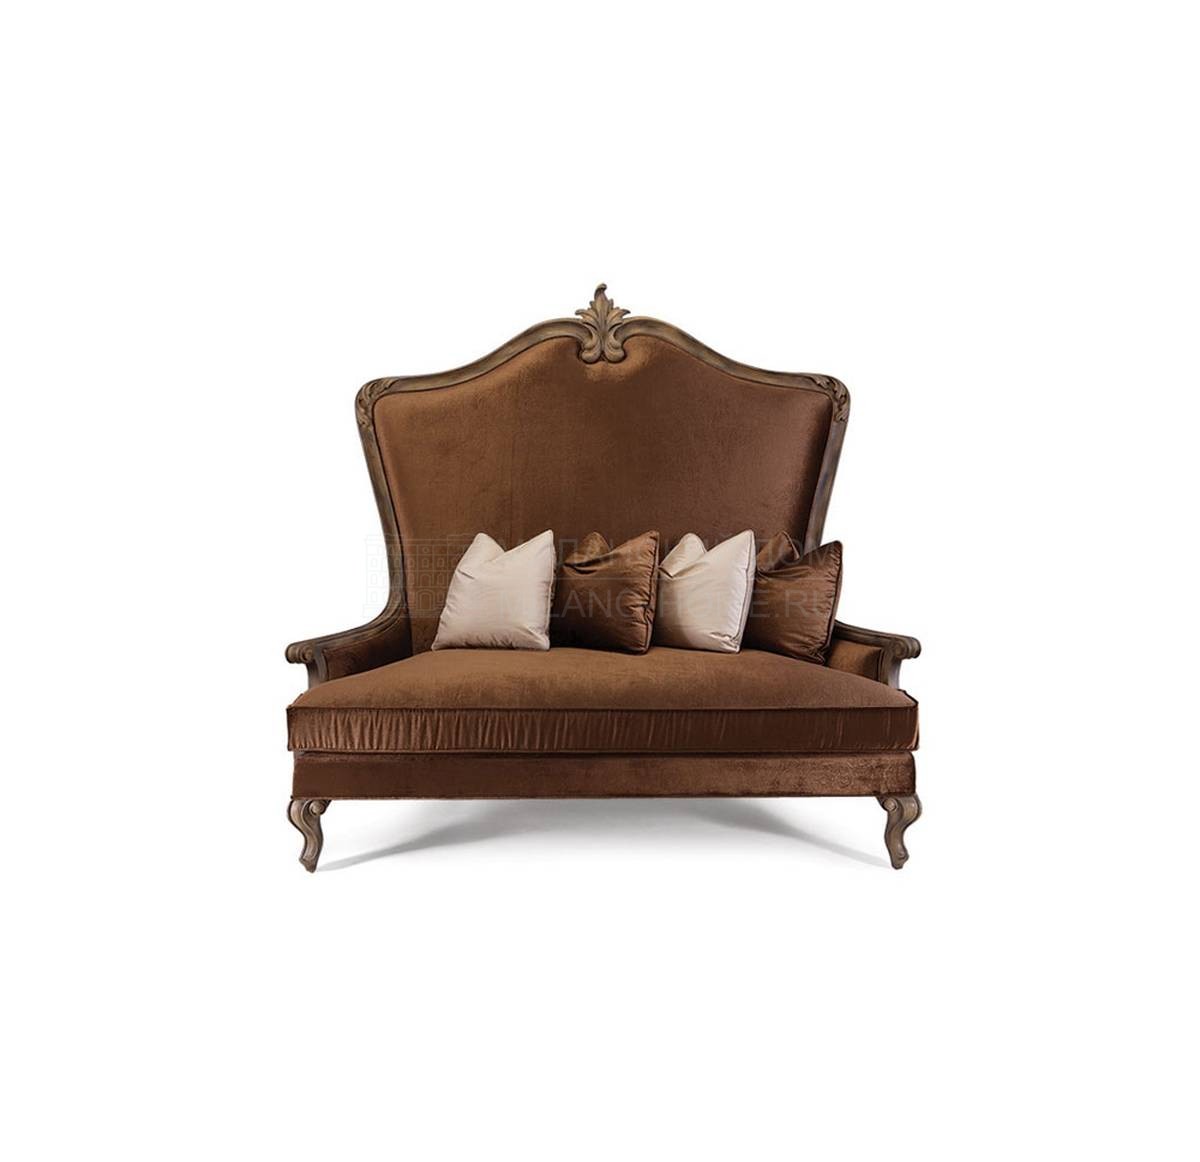 Прямой диван Stark sofa из США фабрики CHRISTOPHER GUY